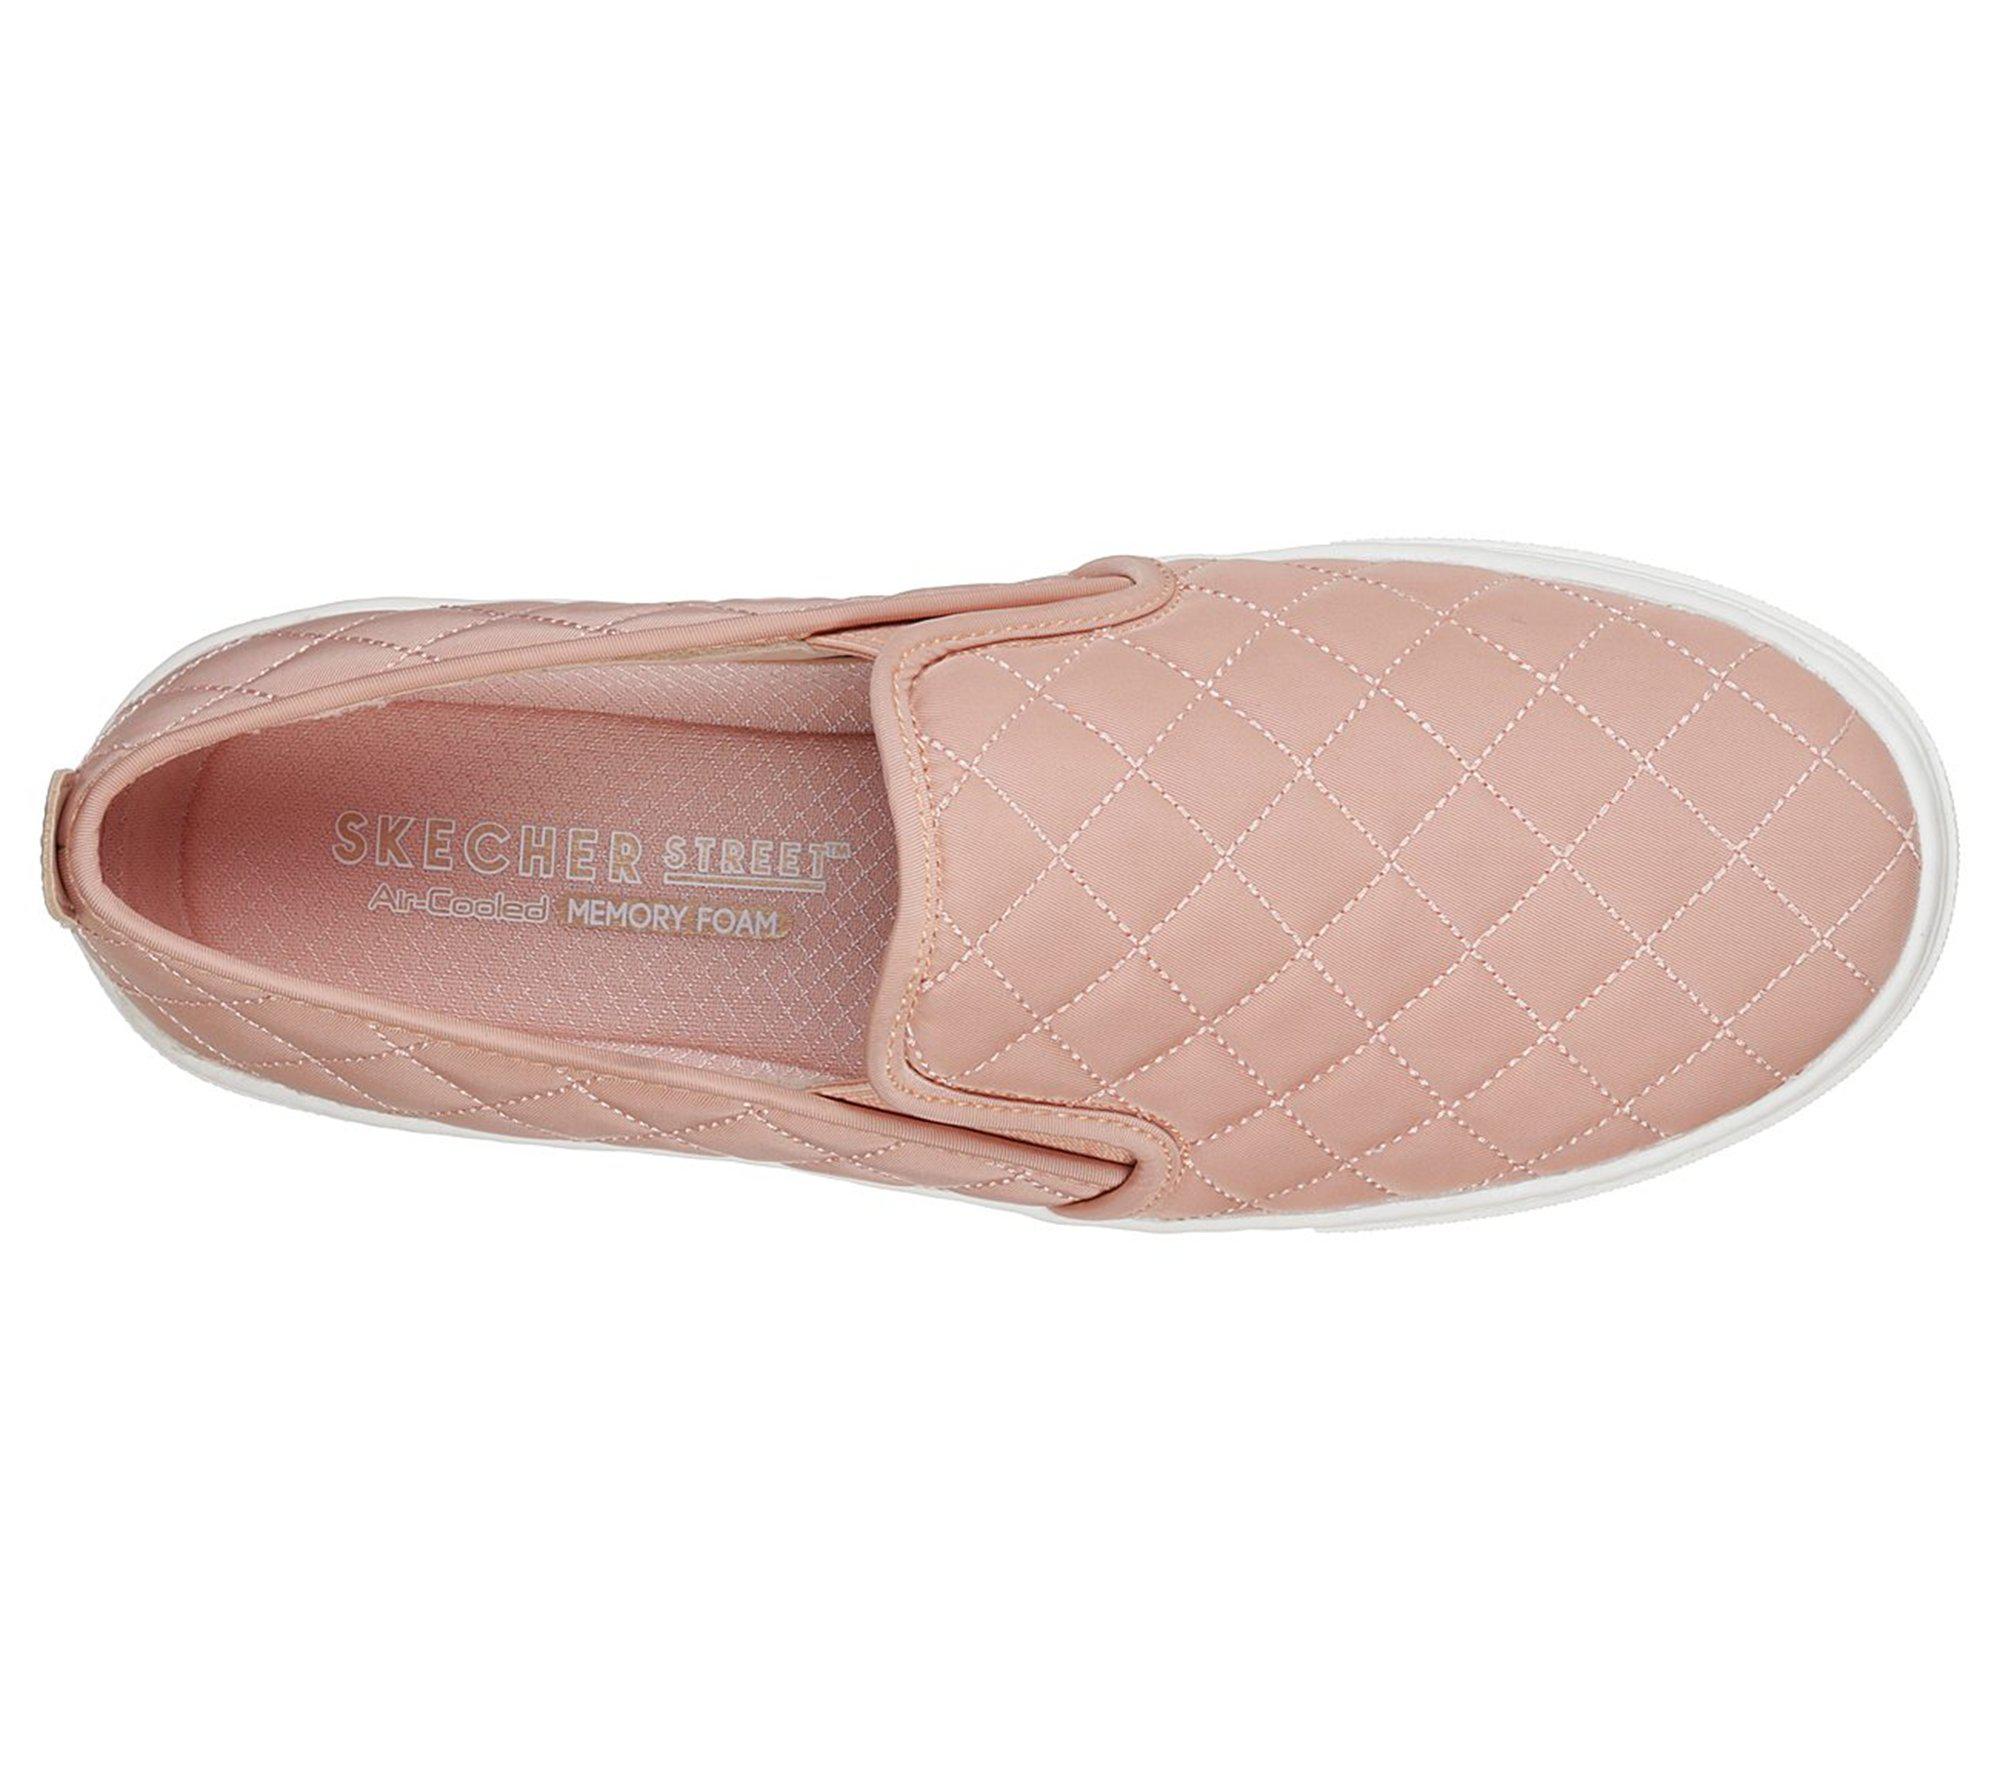 Skechers Goldie - Pillow Top in Pink - Lyst